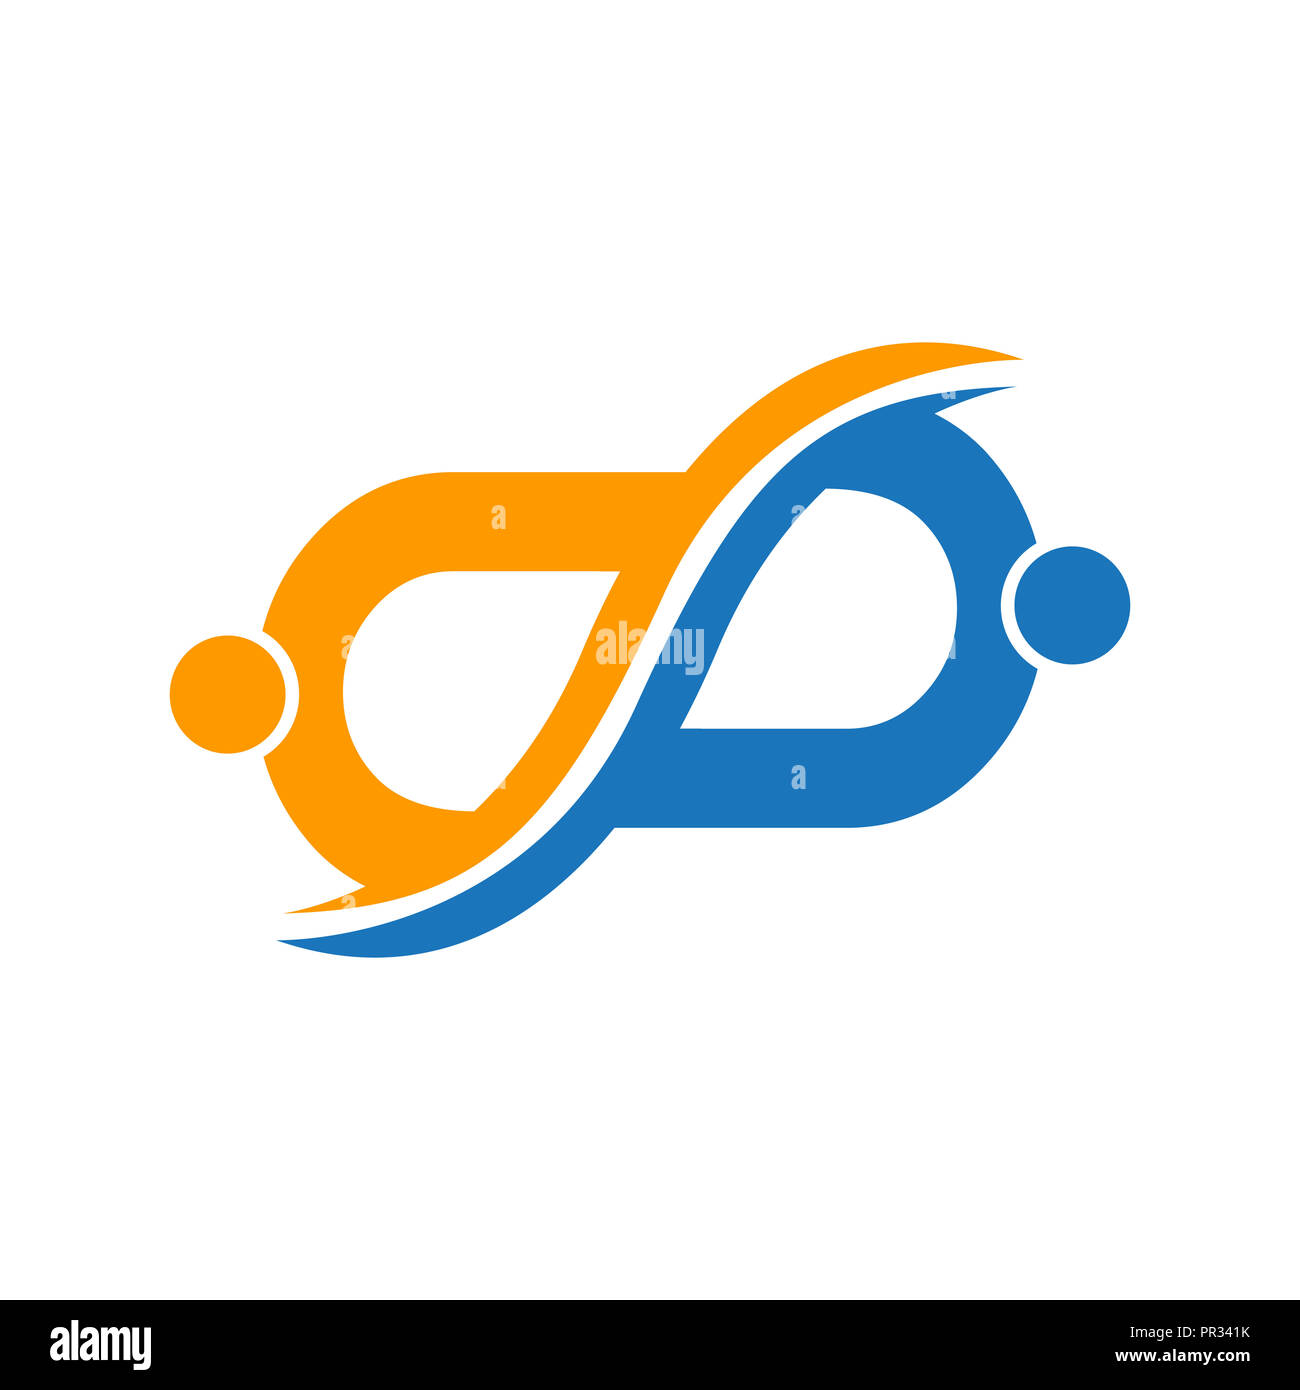 Gemeinschaft Familie Obacht Leute Logo. Vector Illustration Stockfoto